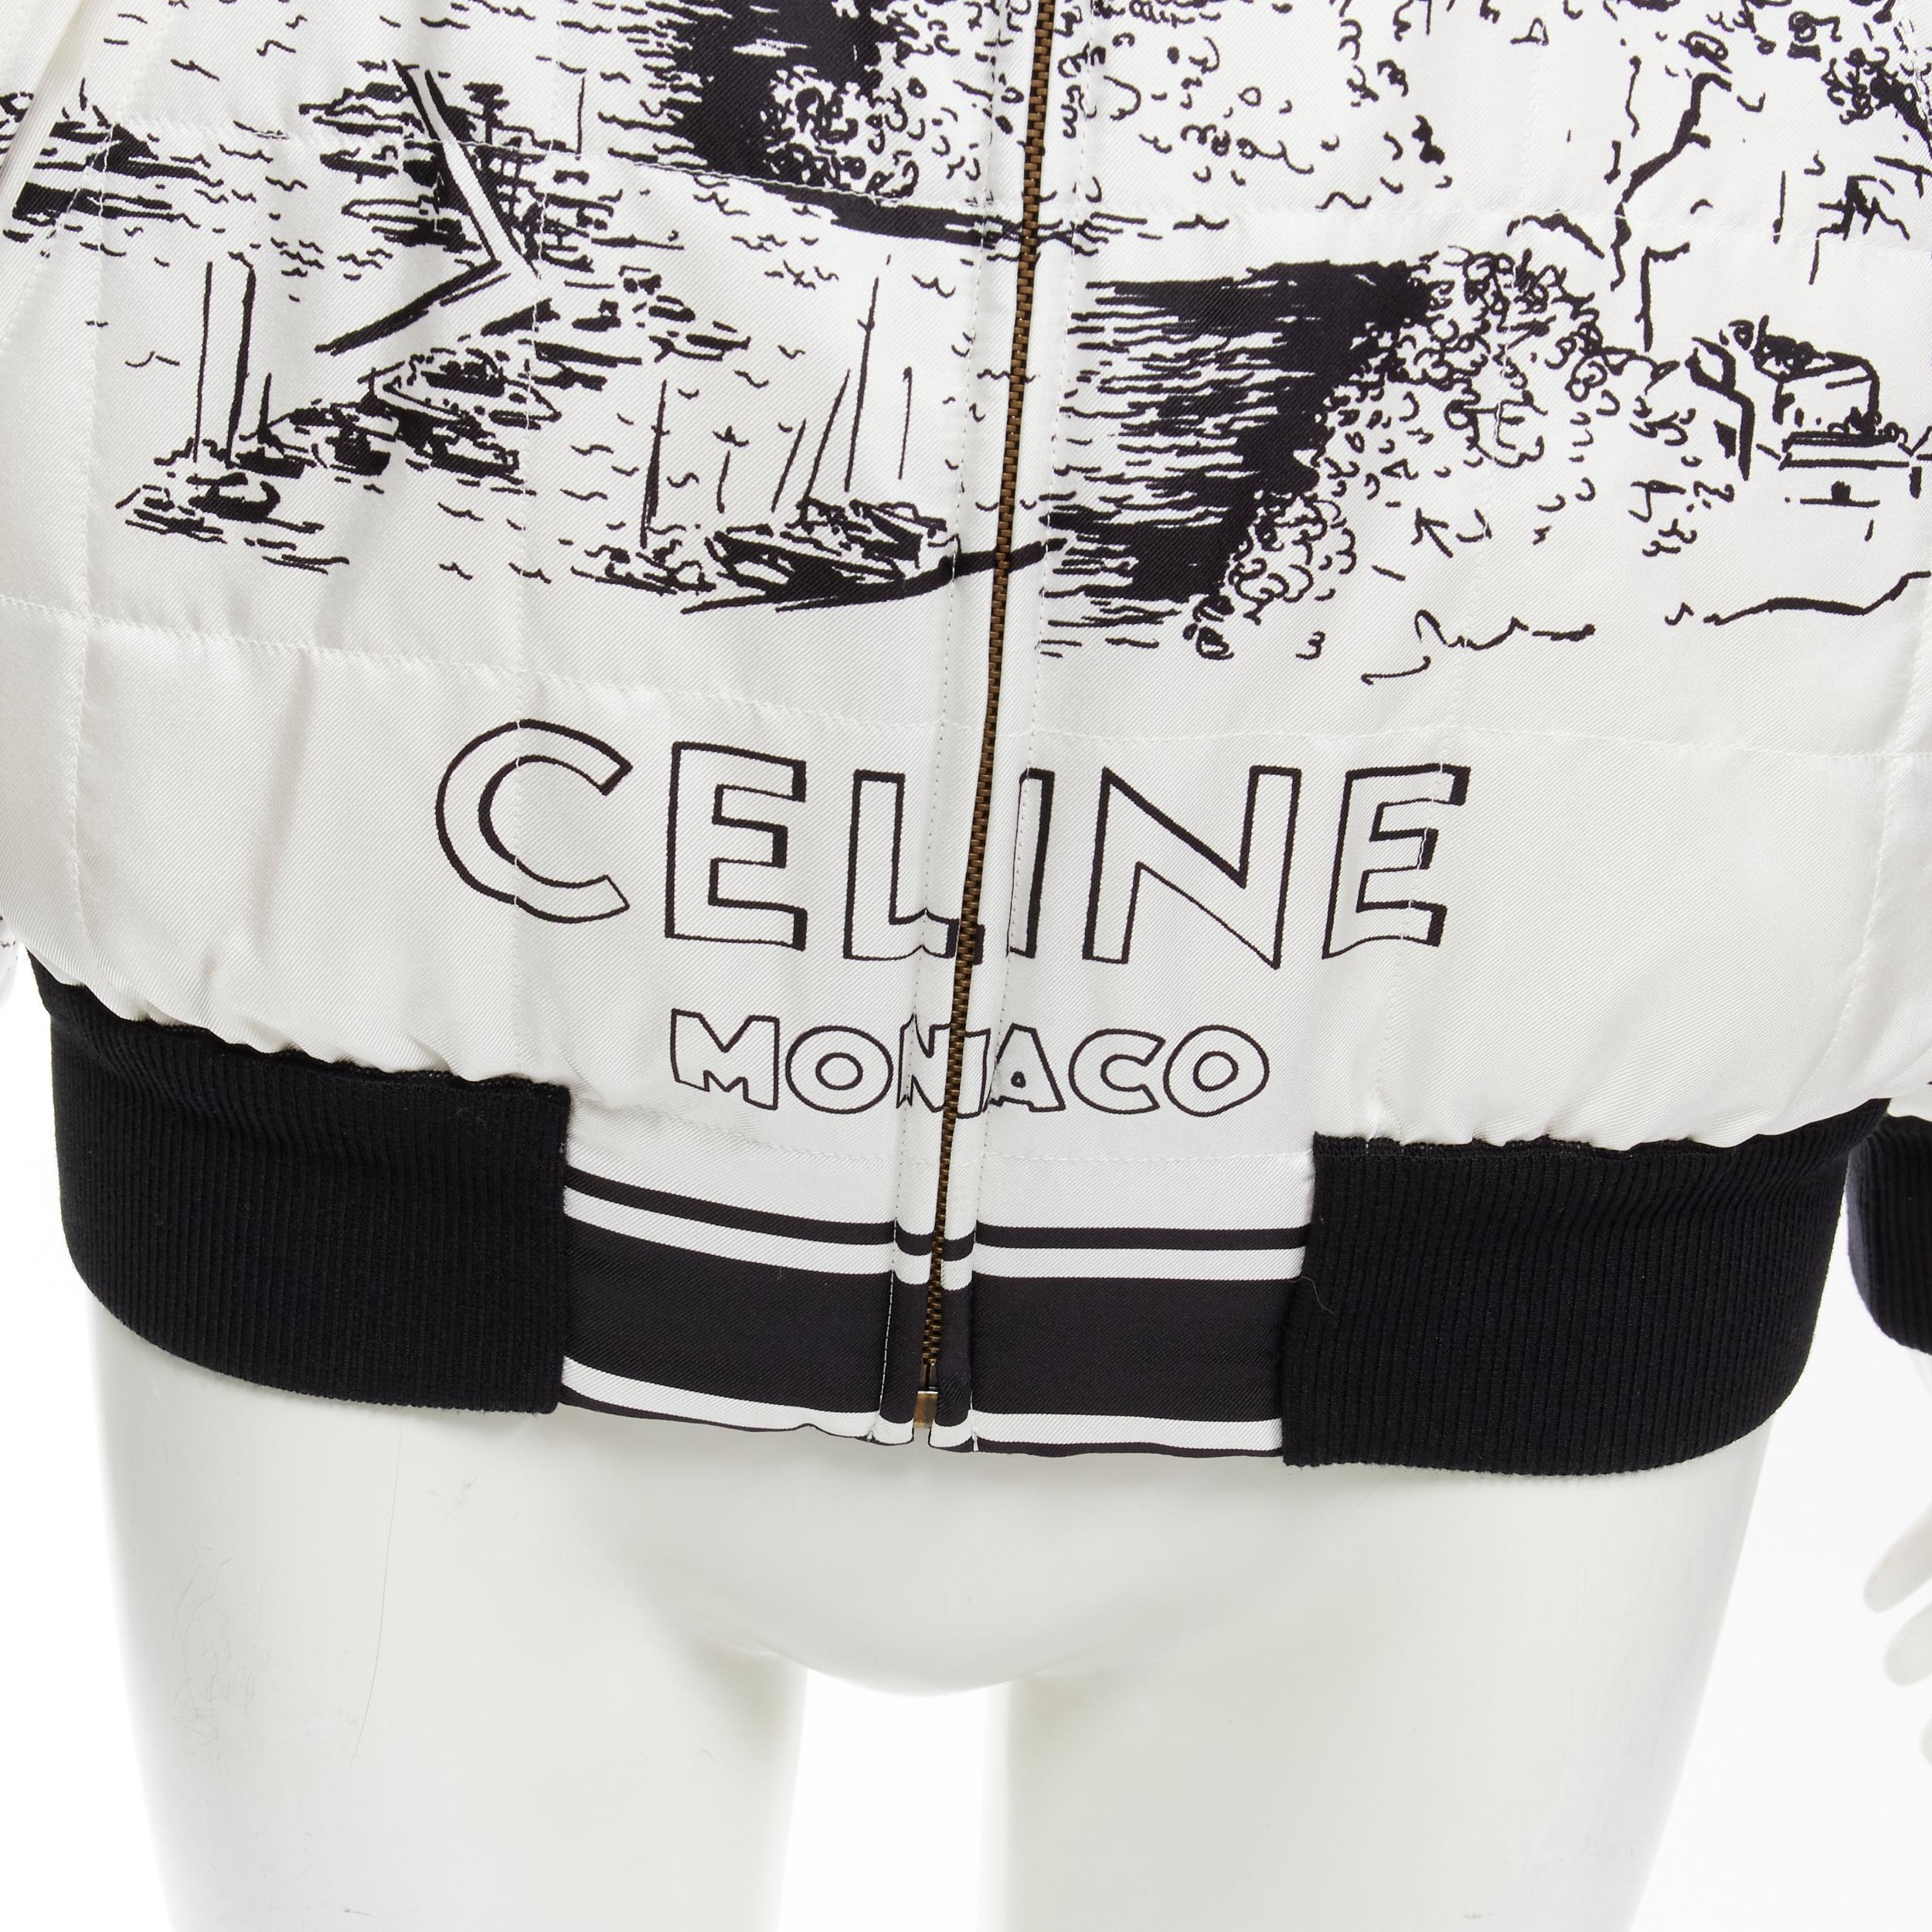 CELINE Hedi Slimane Runway Casaque white silk foulard reversible bomber FR34
Brand: Celine
Designer: Hedi Slimane
Collection: Spring Summer 2021 Runway
Material: 100% Silk
Color: White
Pattern: Abstract
Closure: Zip
Extra Detail: Fully reversible